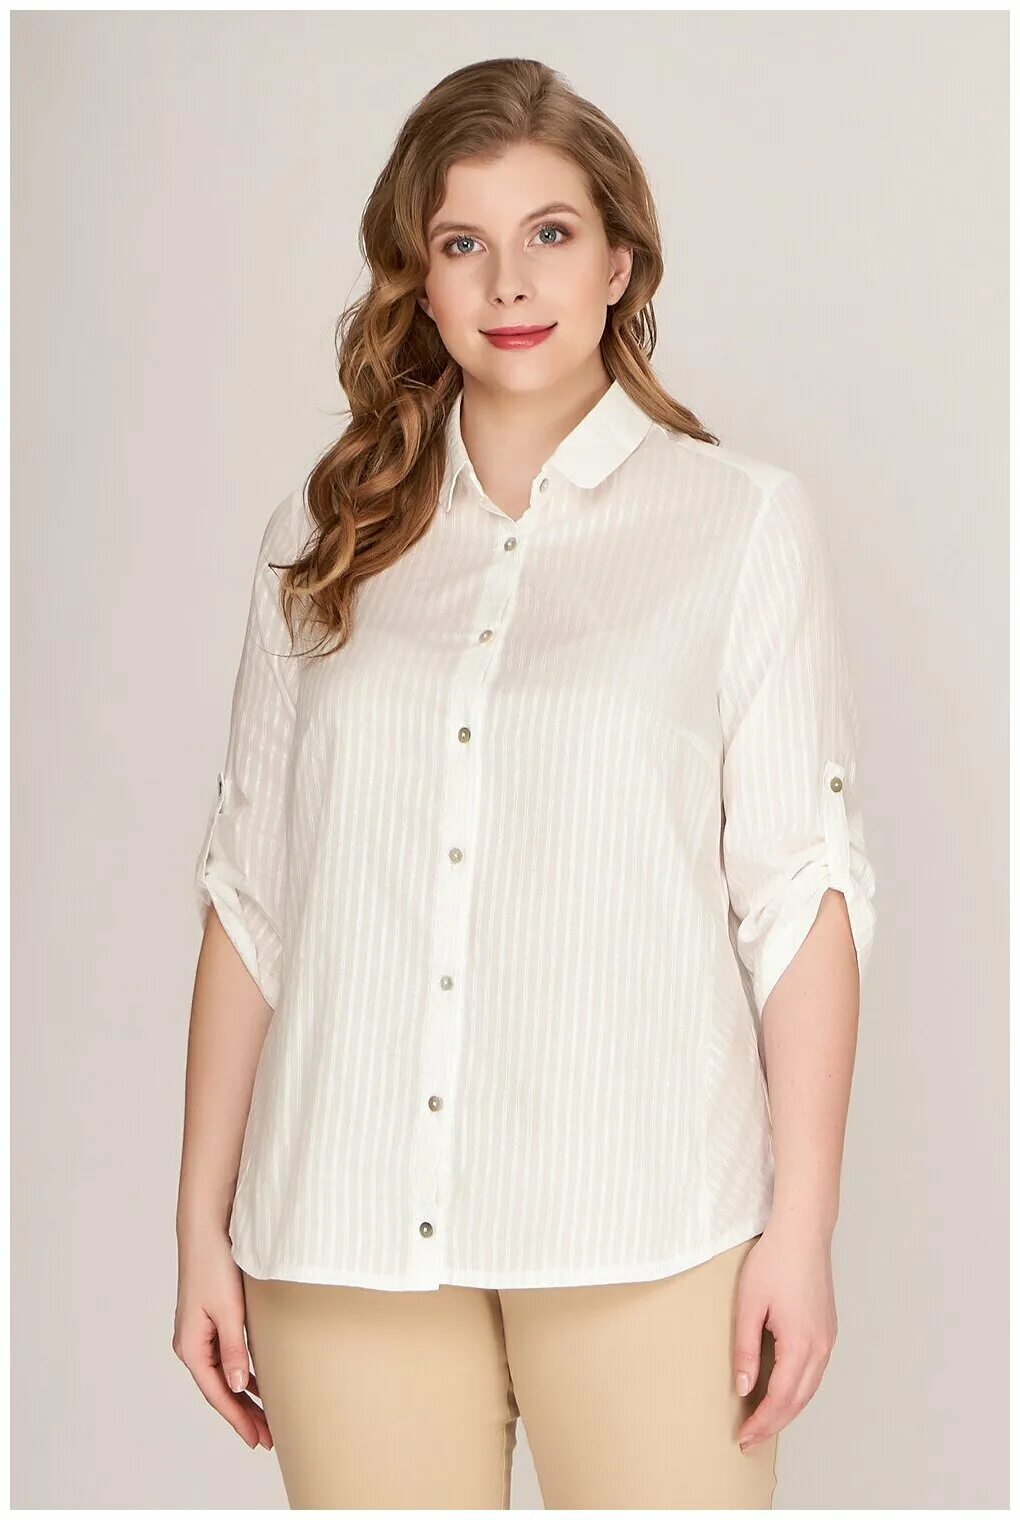 Озон белая блузка. Блуза 41255 Lina. Женщина в блузке. Белые блузки для полных. Блузки для полных женщин.